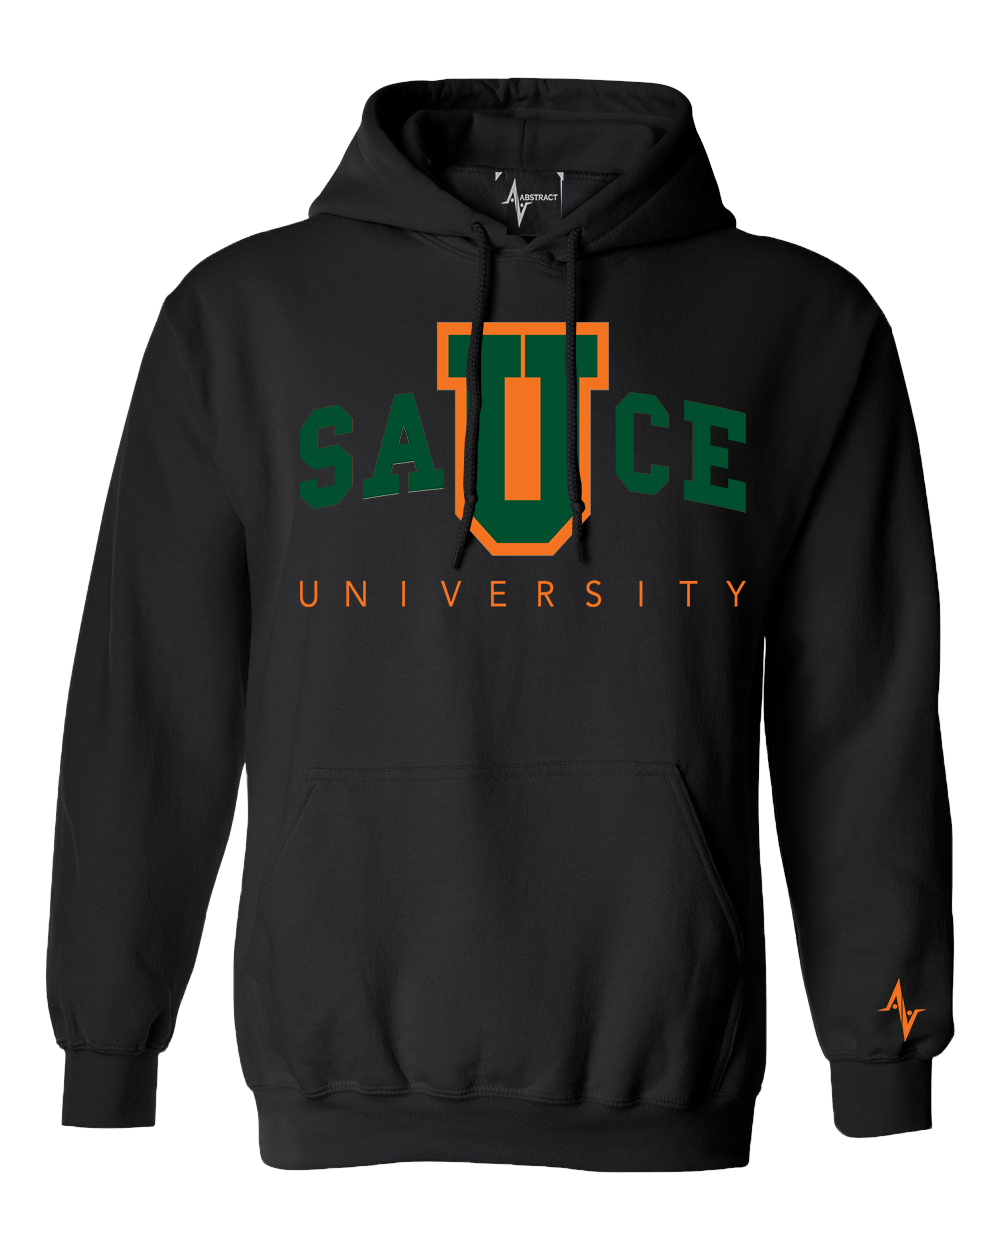 Sauce University Hoodie UM/FAMU inspired/ Sauce Hoodie